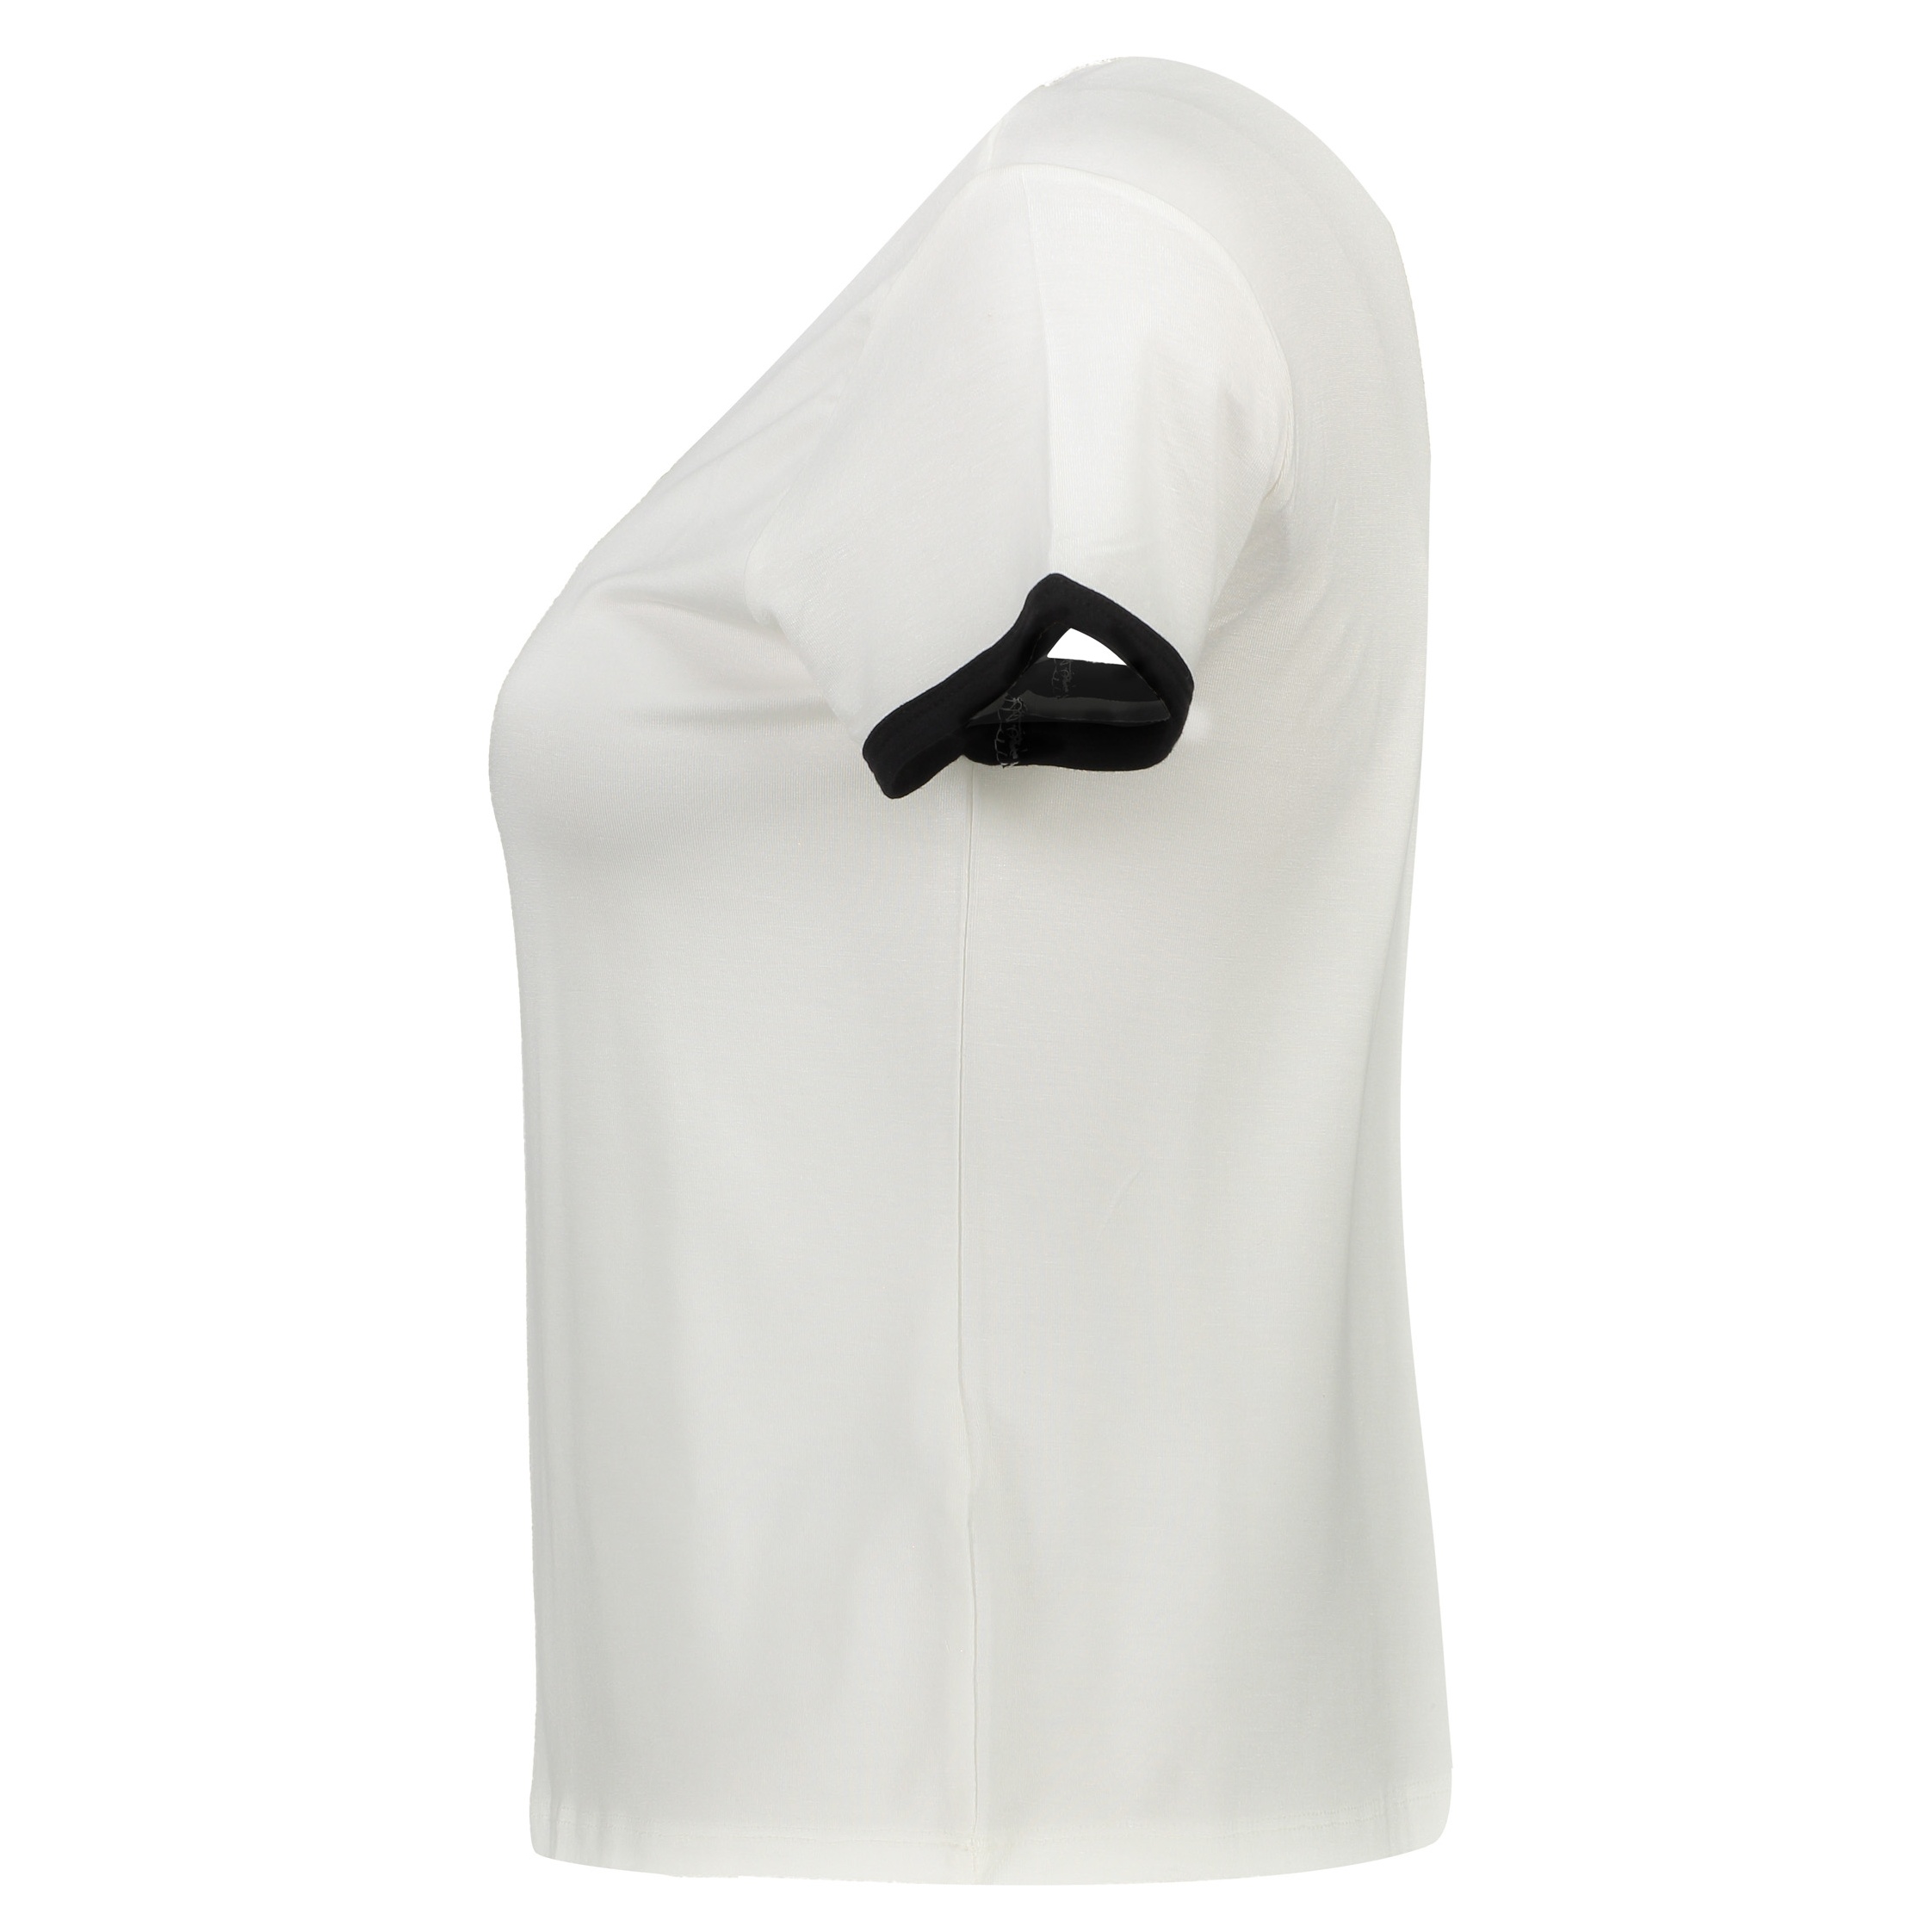 تی شرت نه کالینز مدل CL1032902-OFF WHITE